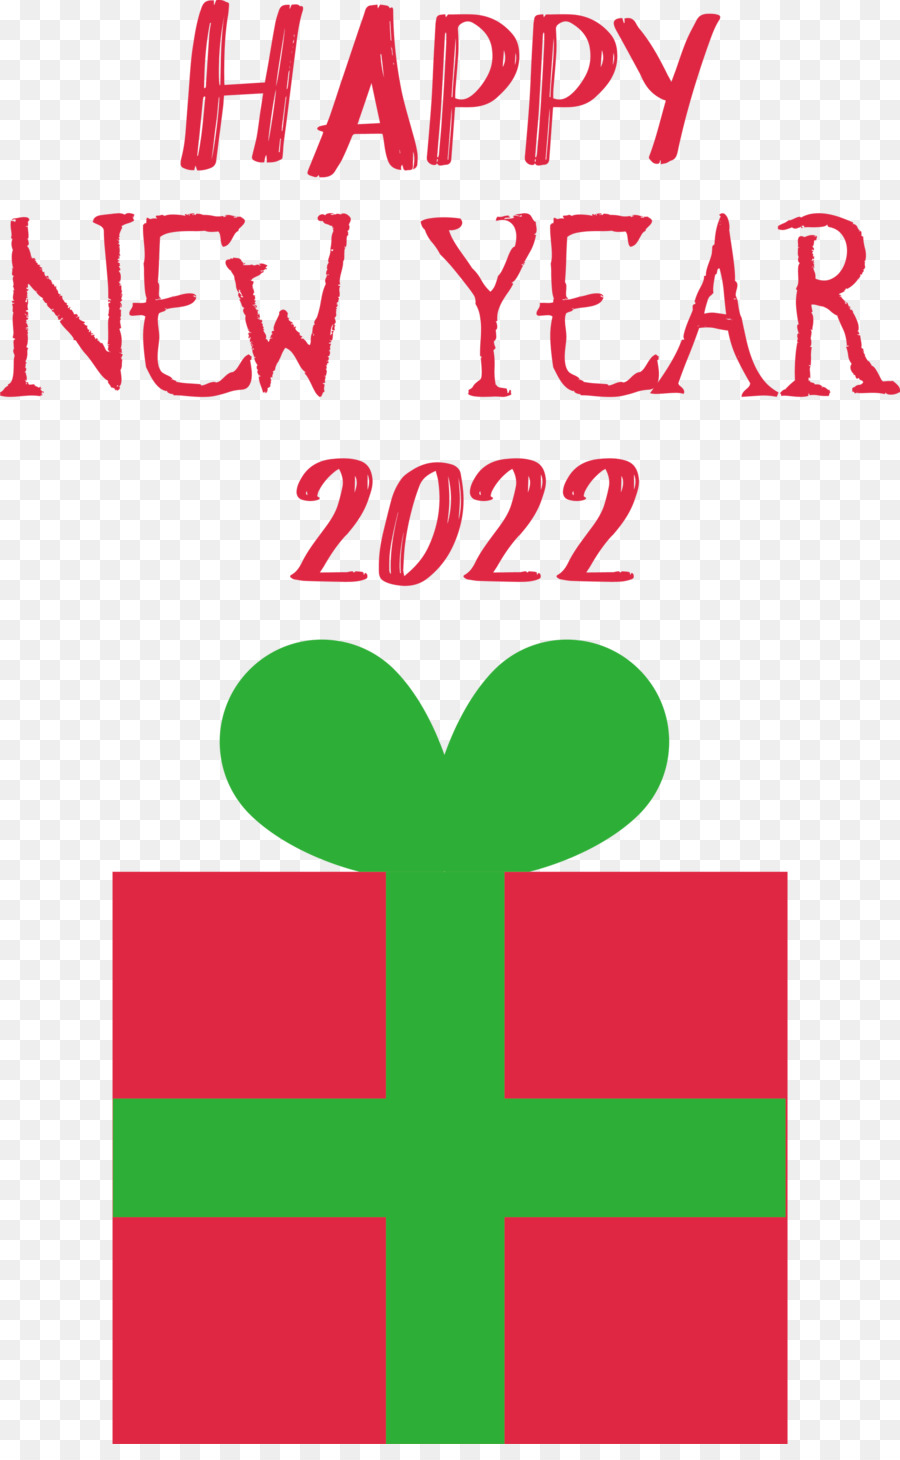 2022 New Year Happy New Year 2022